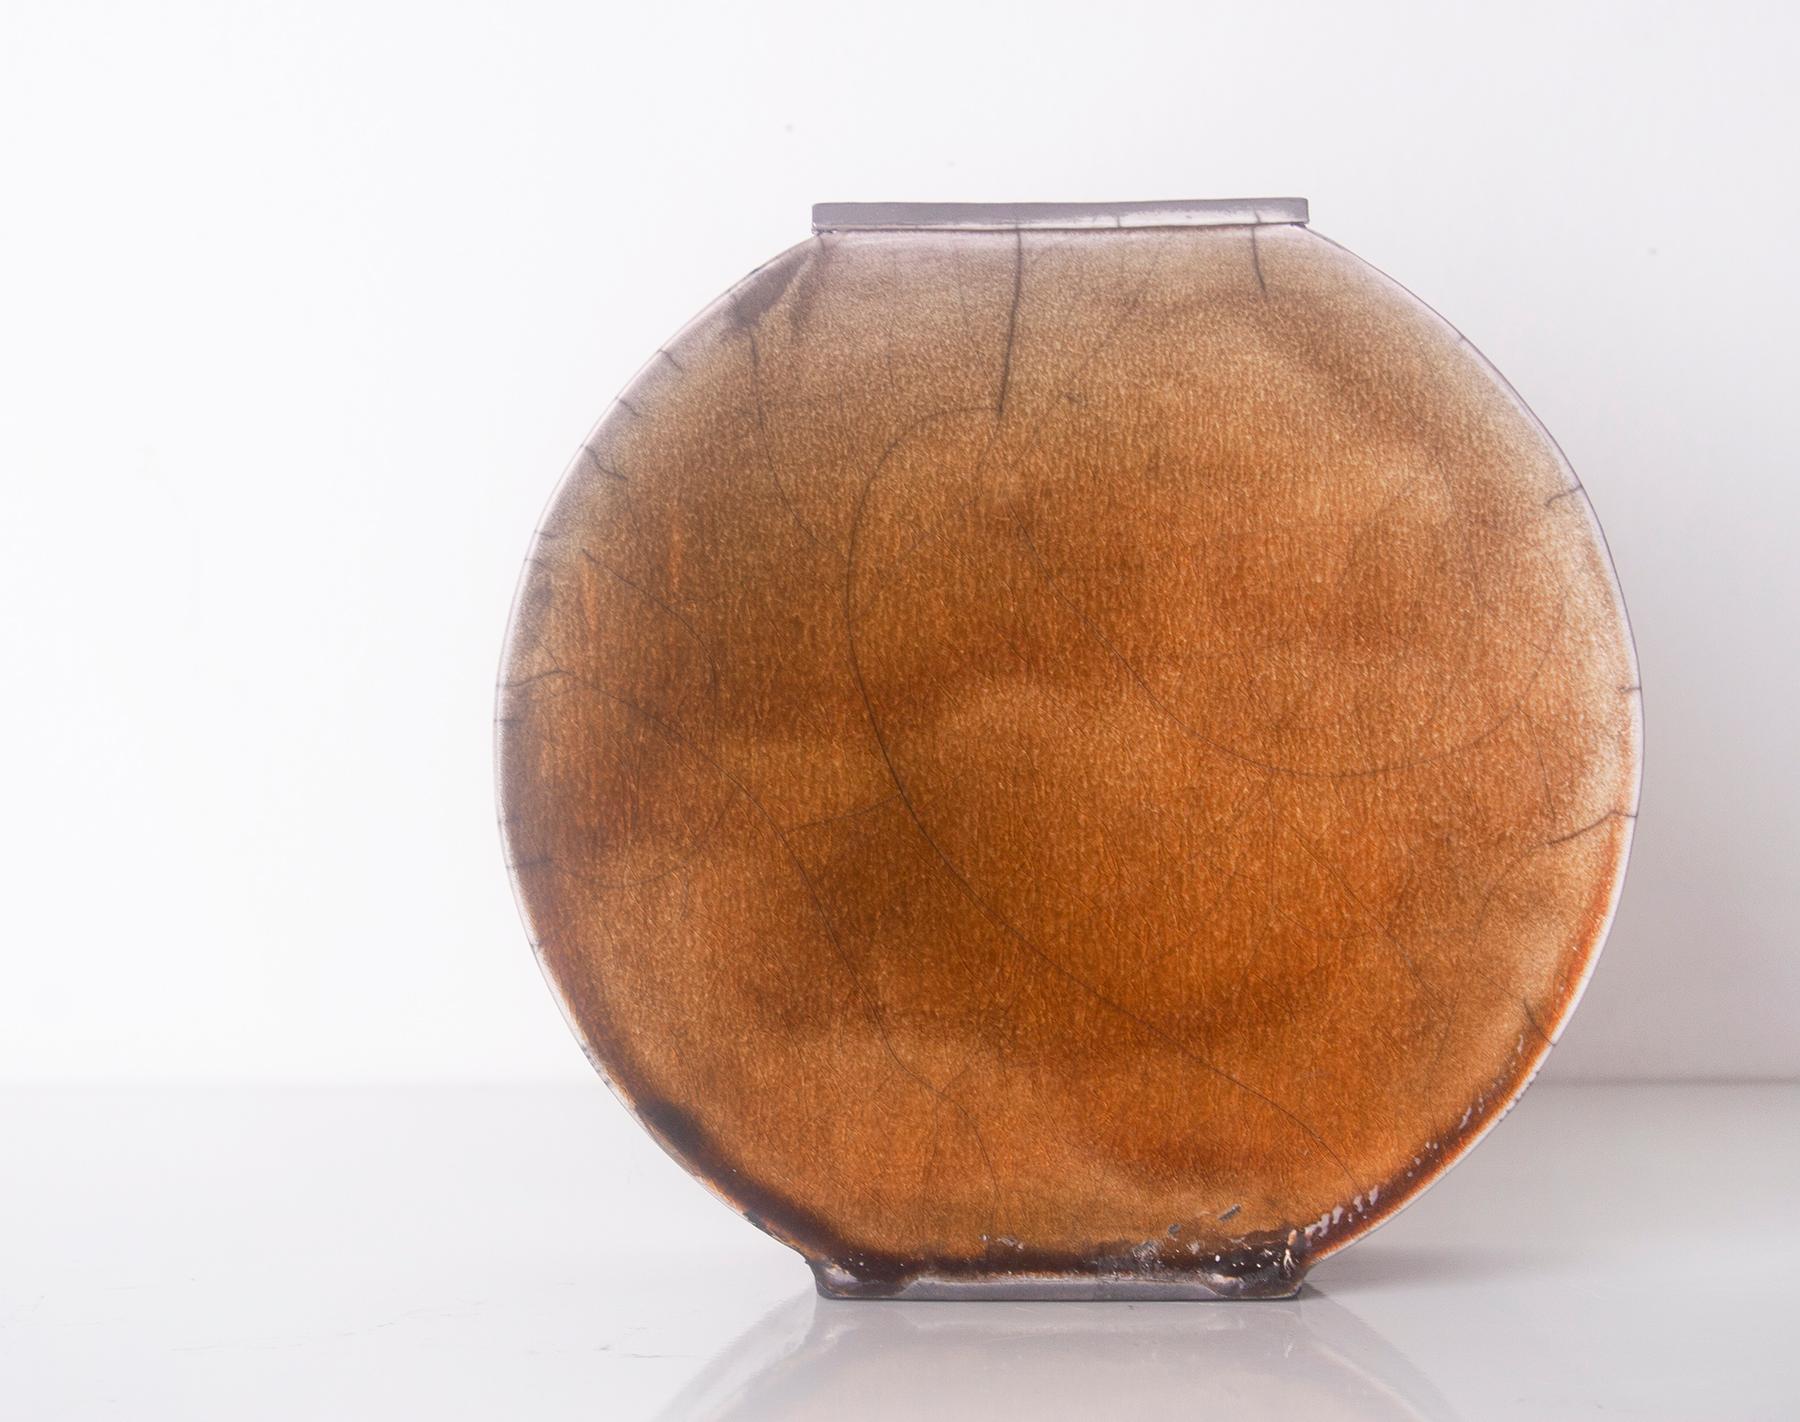 Amber vase by Doa Ceramics 
Dimensions: 12